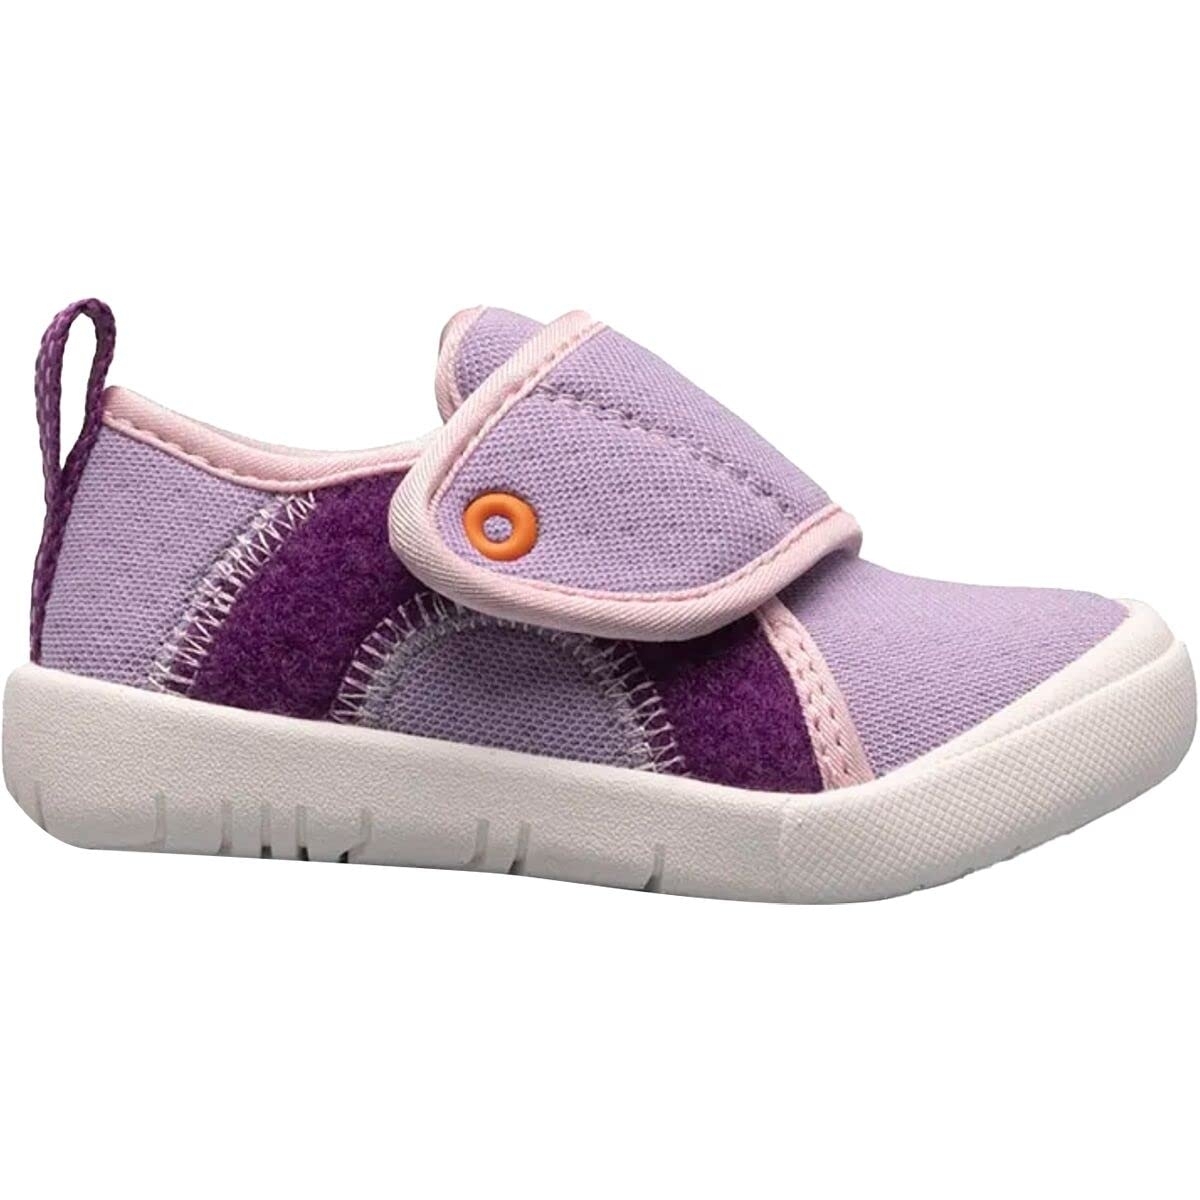 BOGS Unisex Baby Kicker Hook And Loop Shoe Sneaker Lavender Multi - 72811I-541 1 LAVENDER MULTI - LAVENDER MULTI, 10 Little Kid